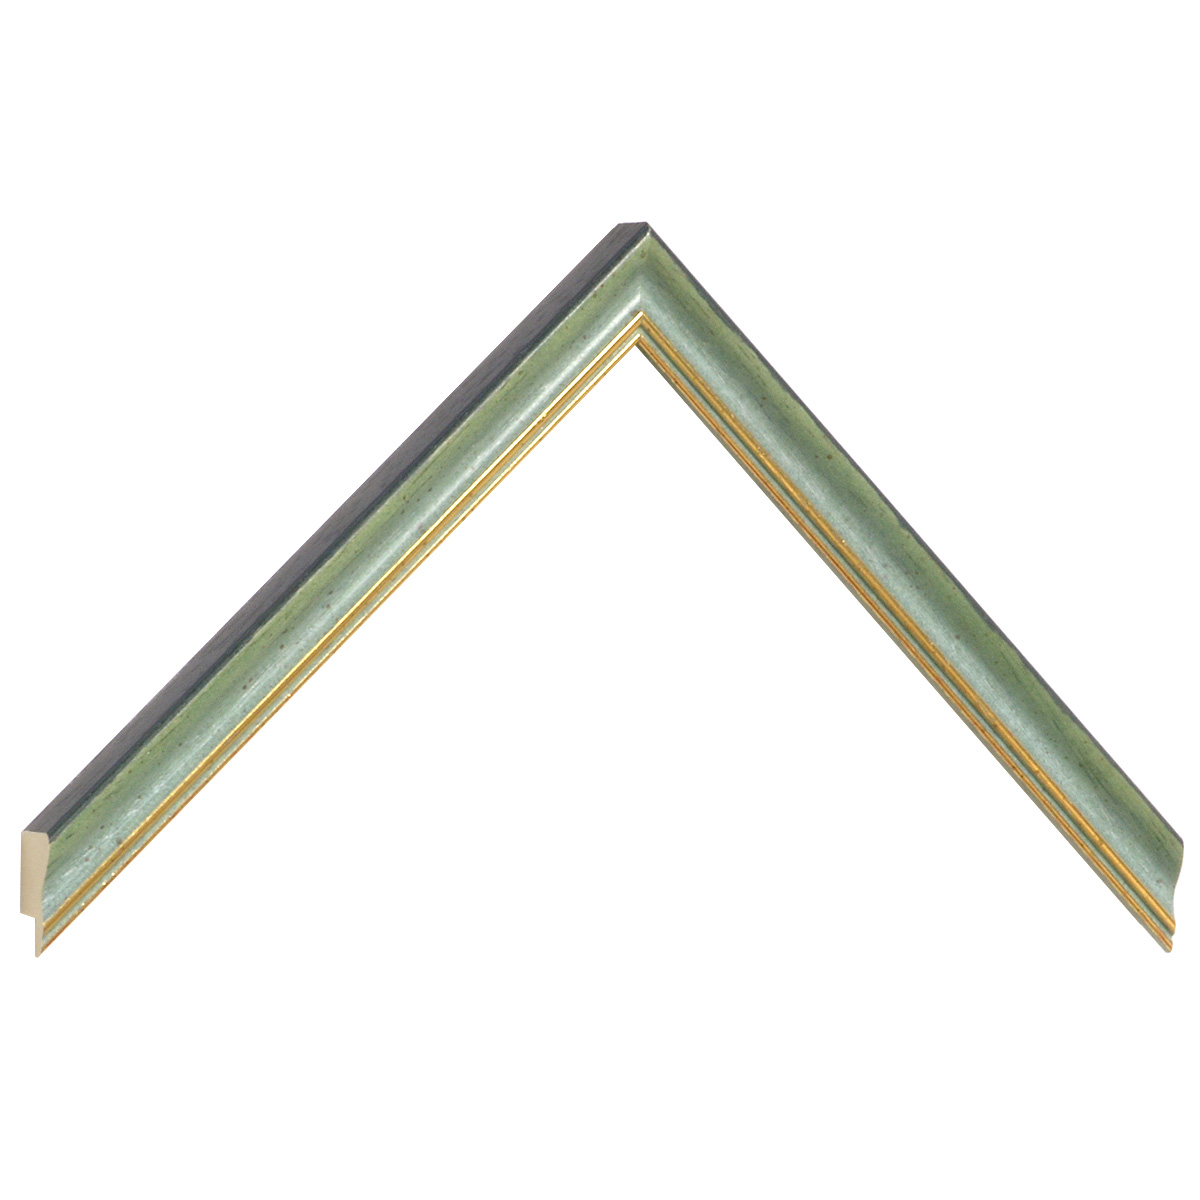 Profil ayous Lățime 15 mm - finisaj verde mat cu fir auriu - Mostră